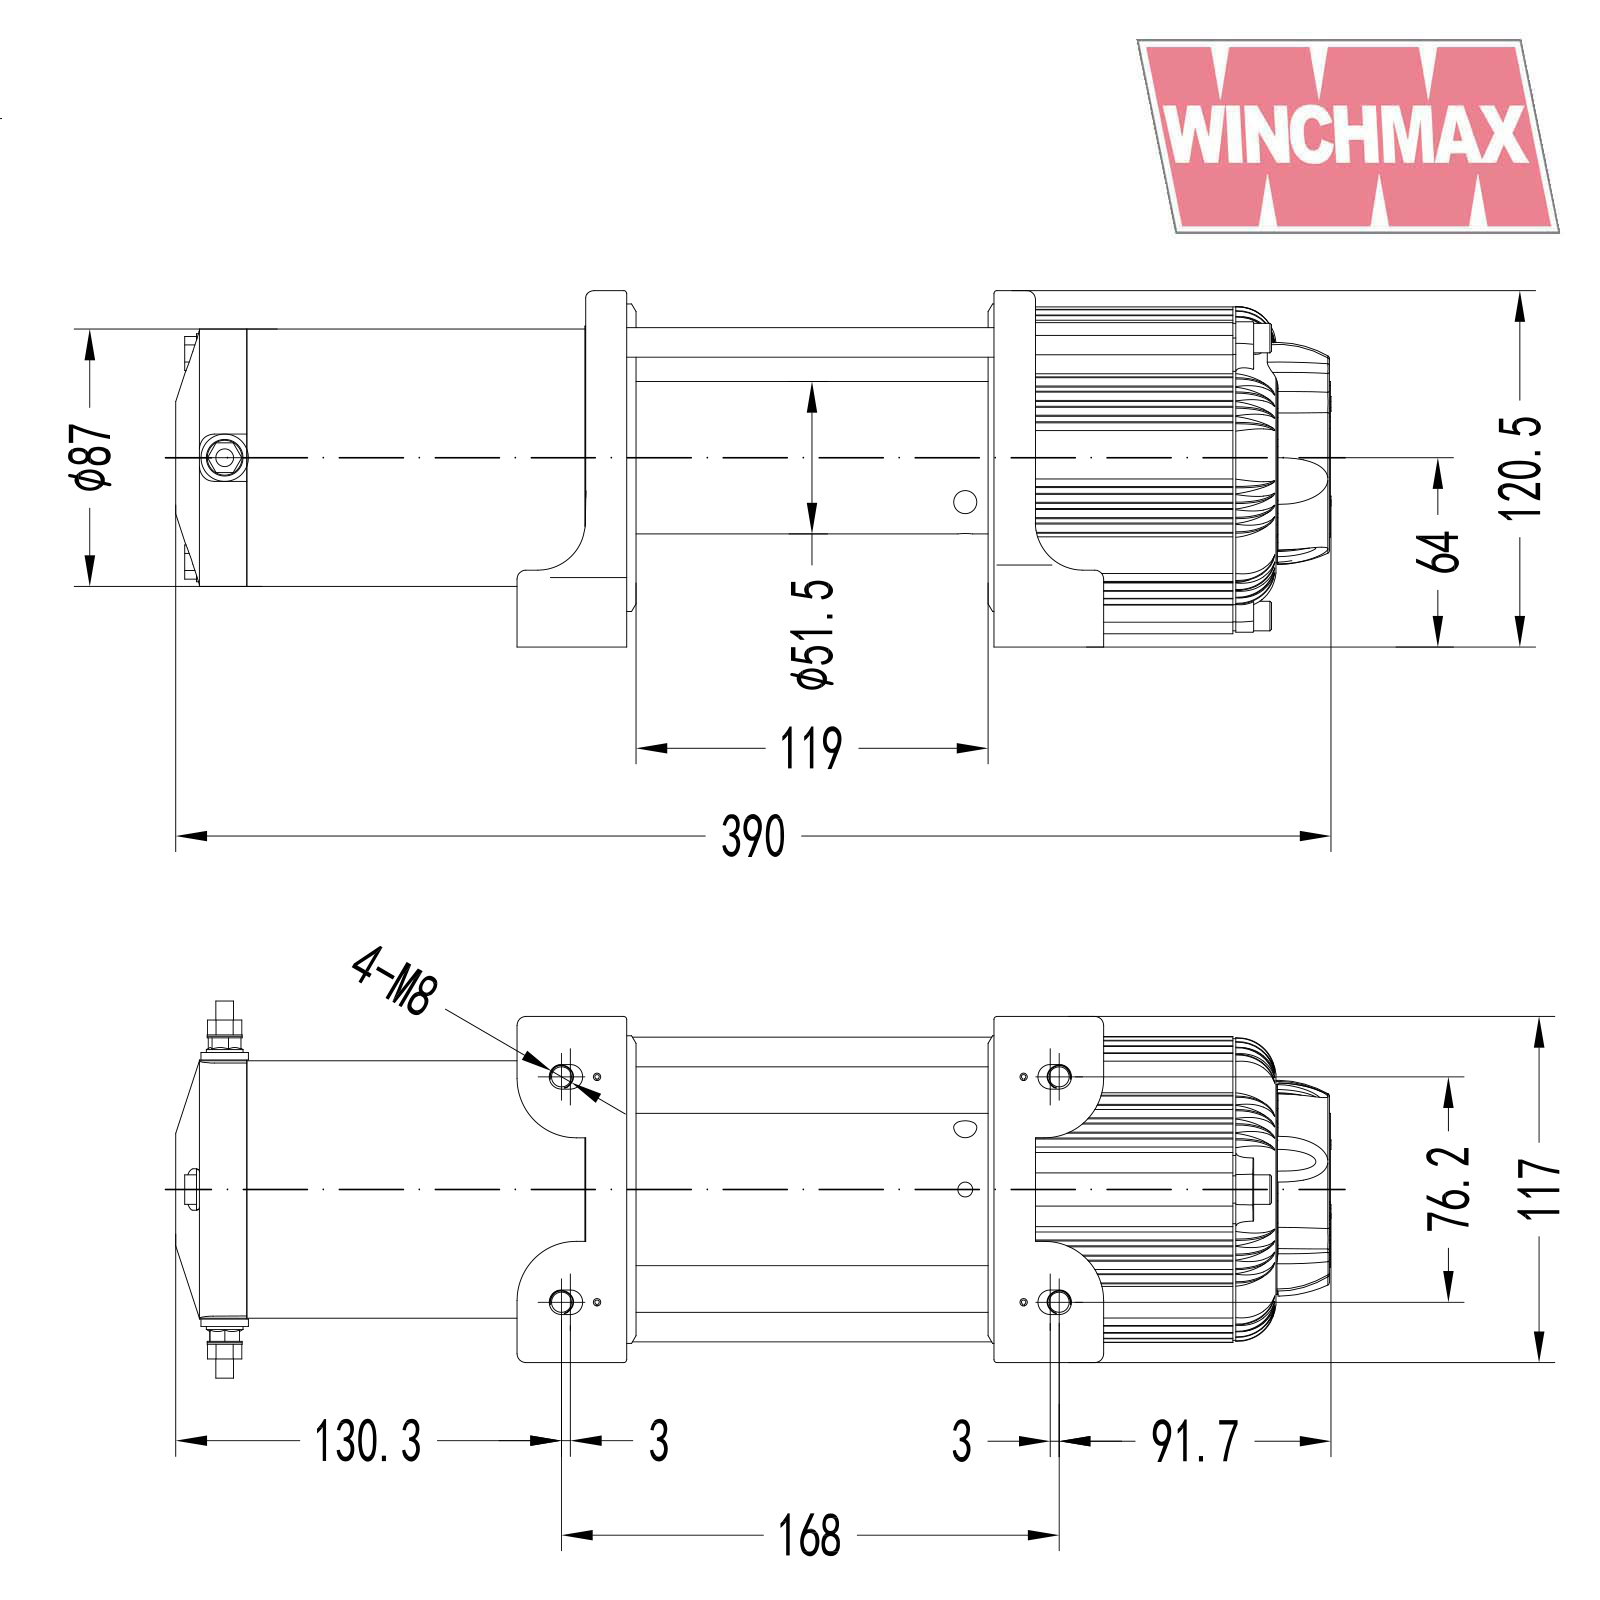 Winchmax 5000lb 12v Winch Tech